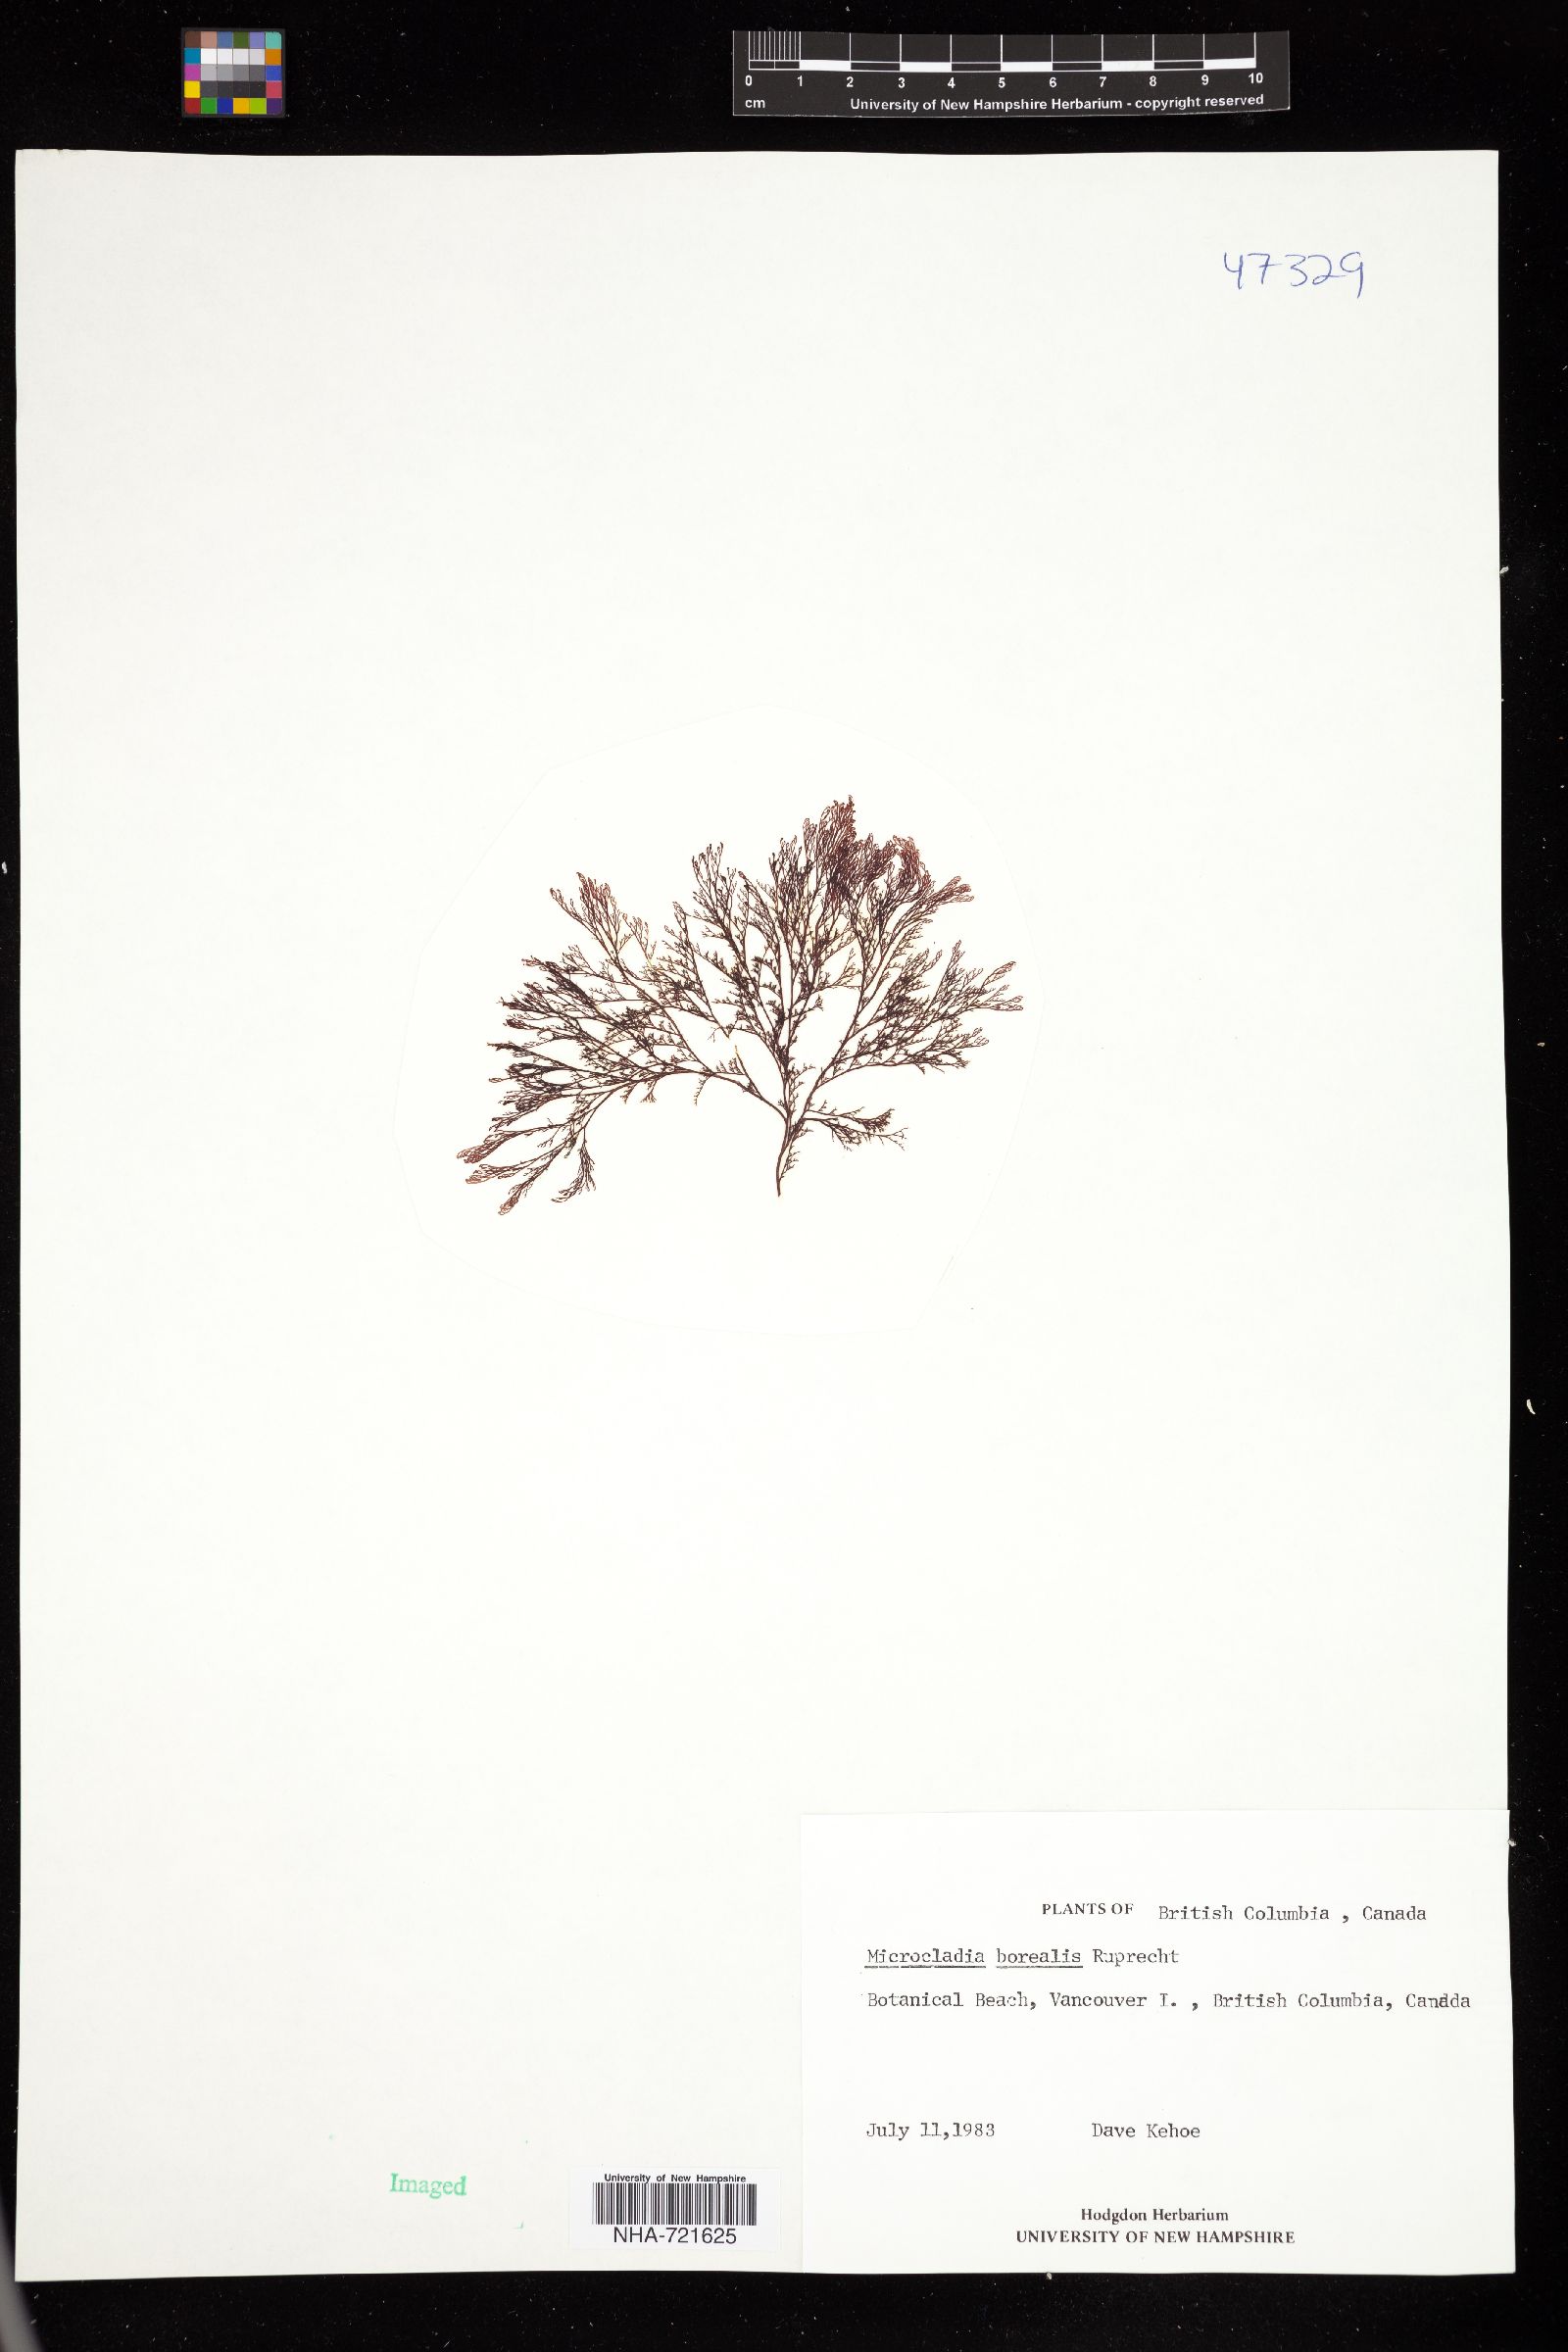 Microcladia borealis image